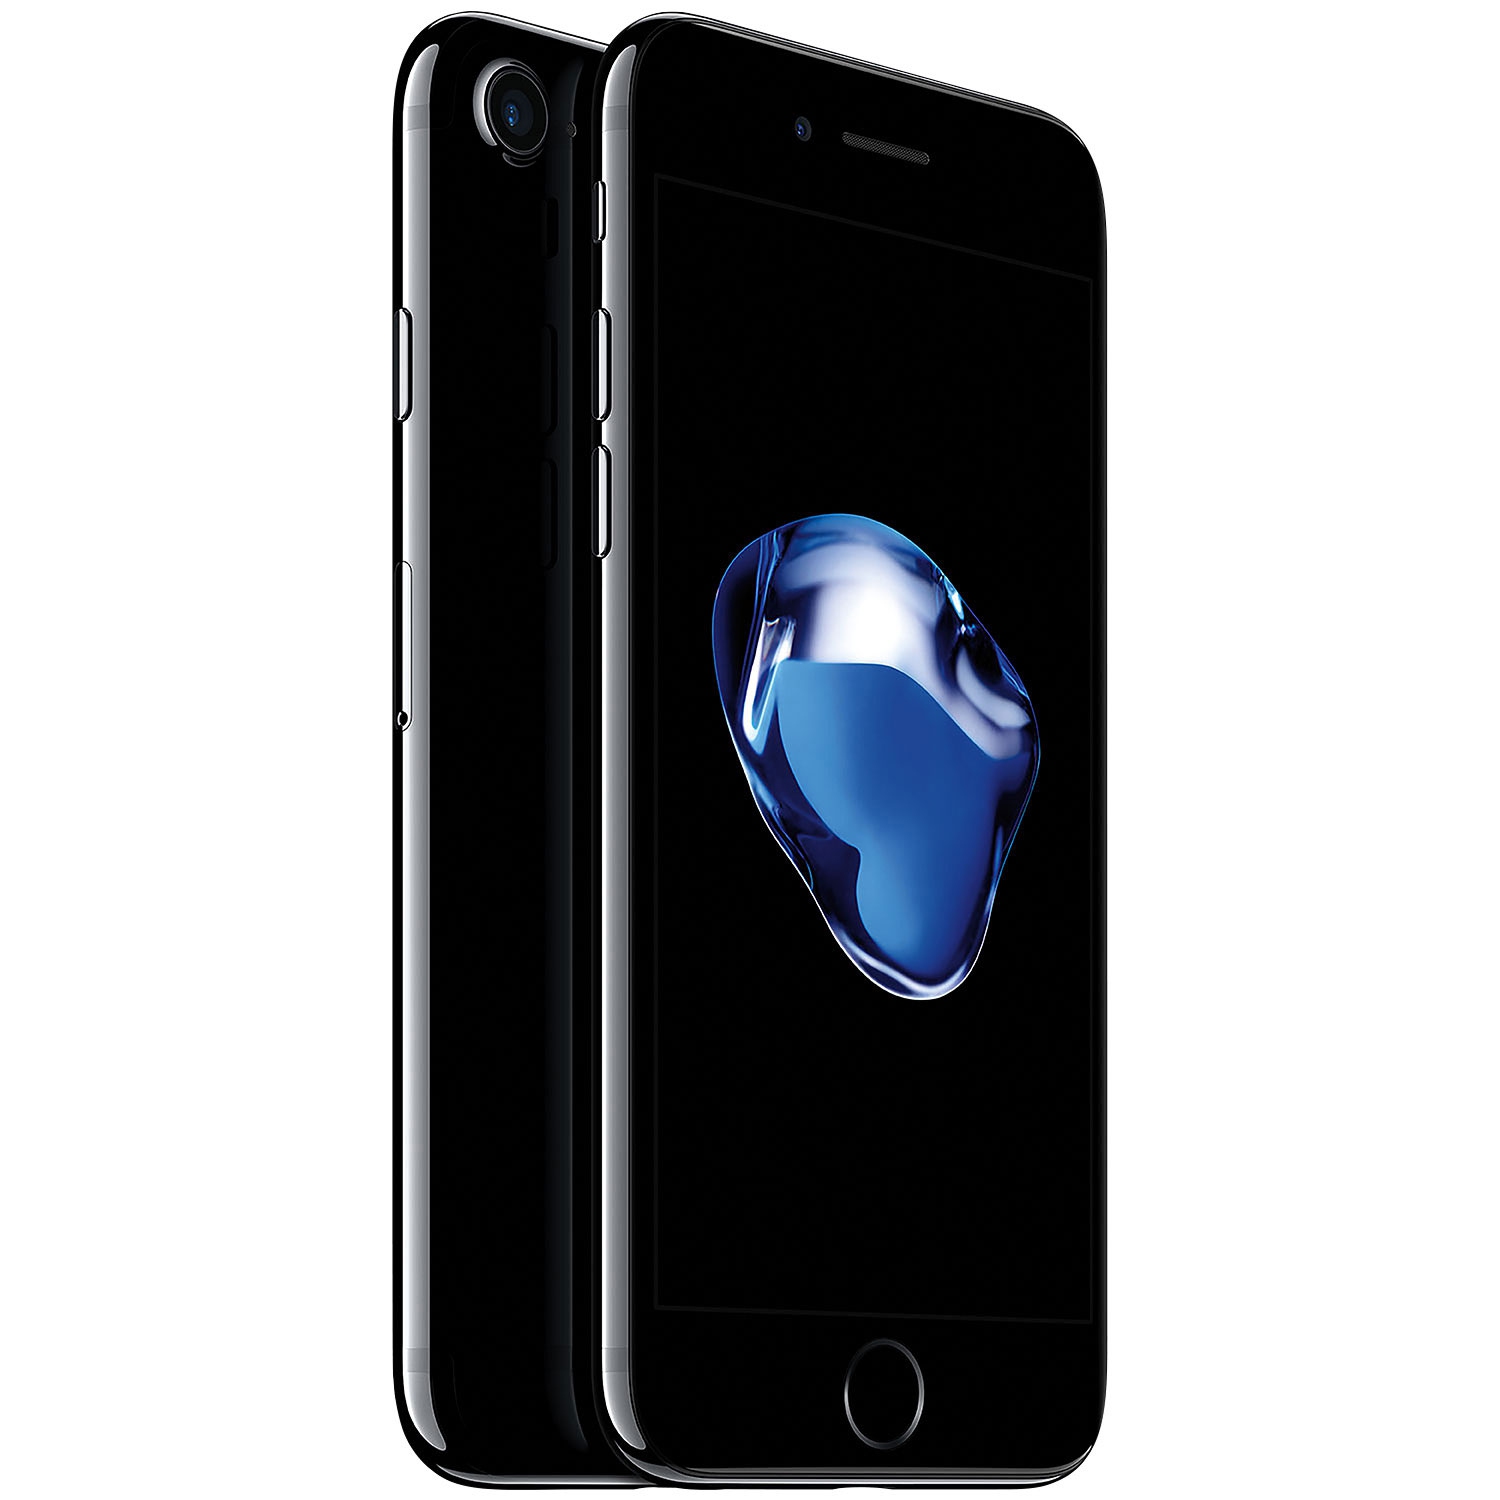 Refurbished (Good) - Apple iPhone 7 128GB Smartphone - Jet Black - Unlocked